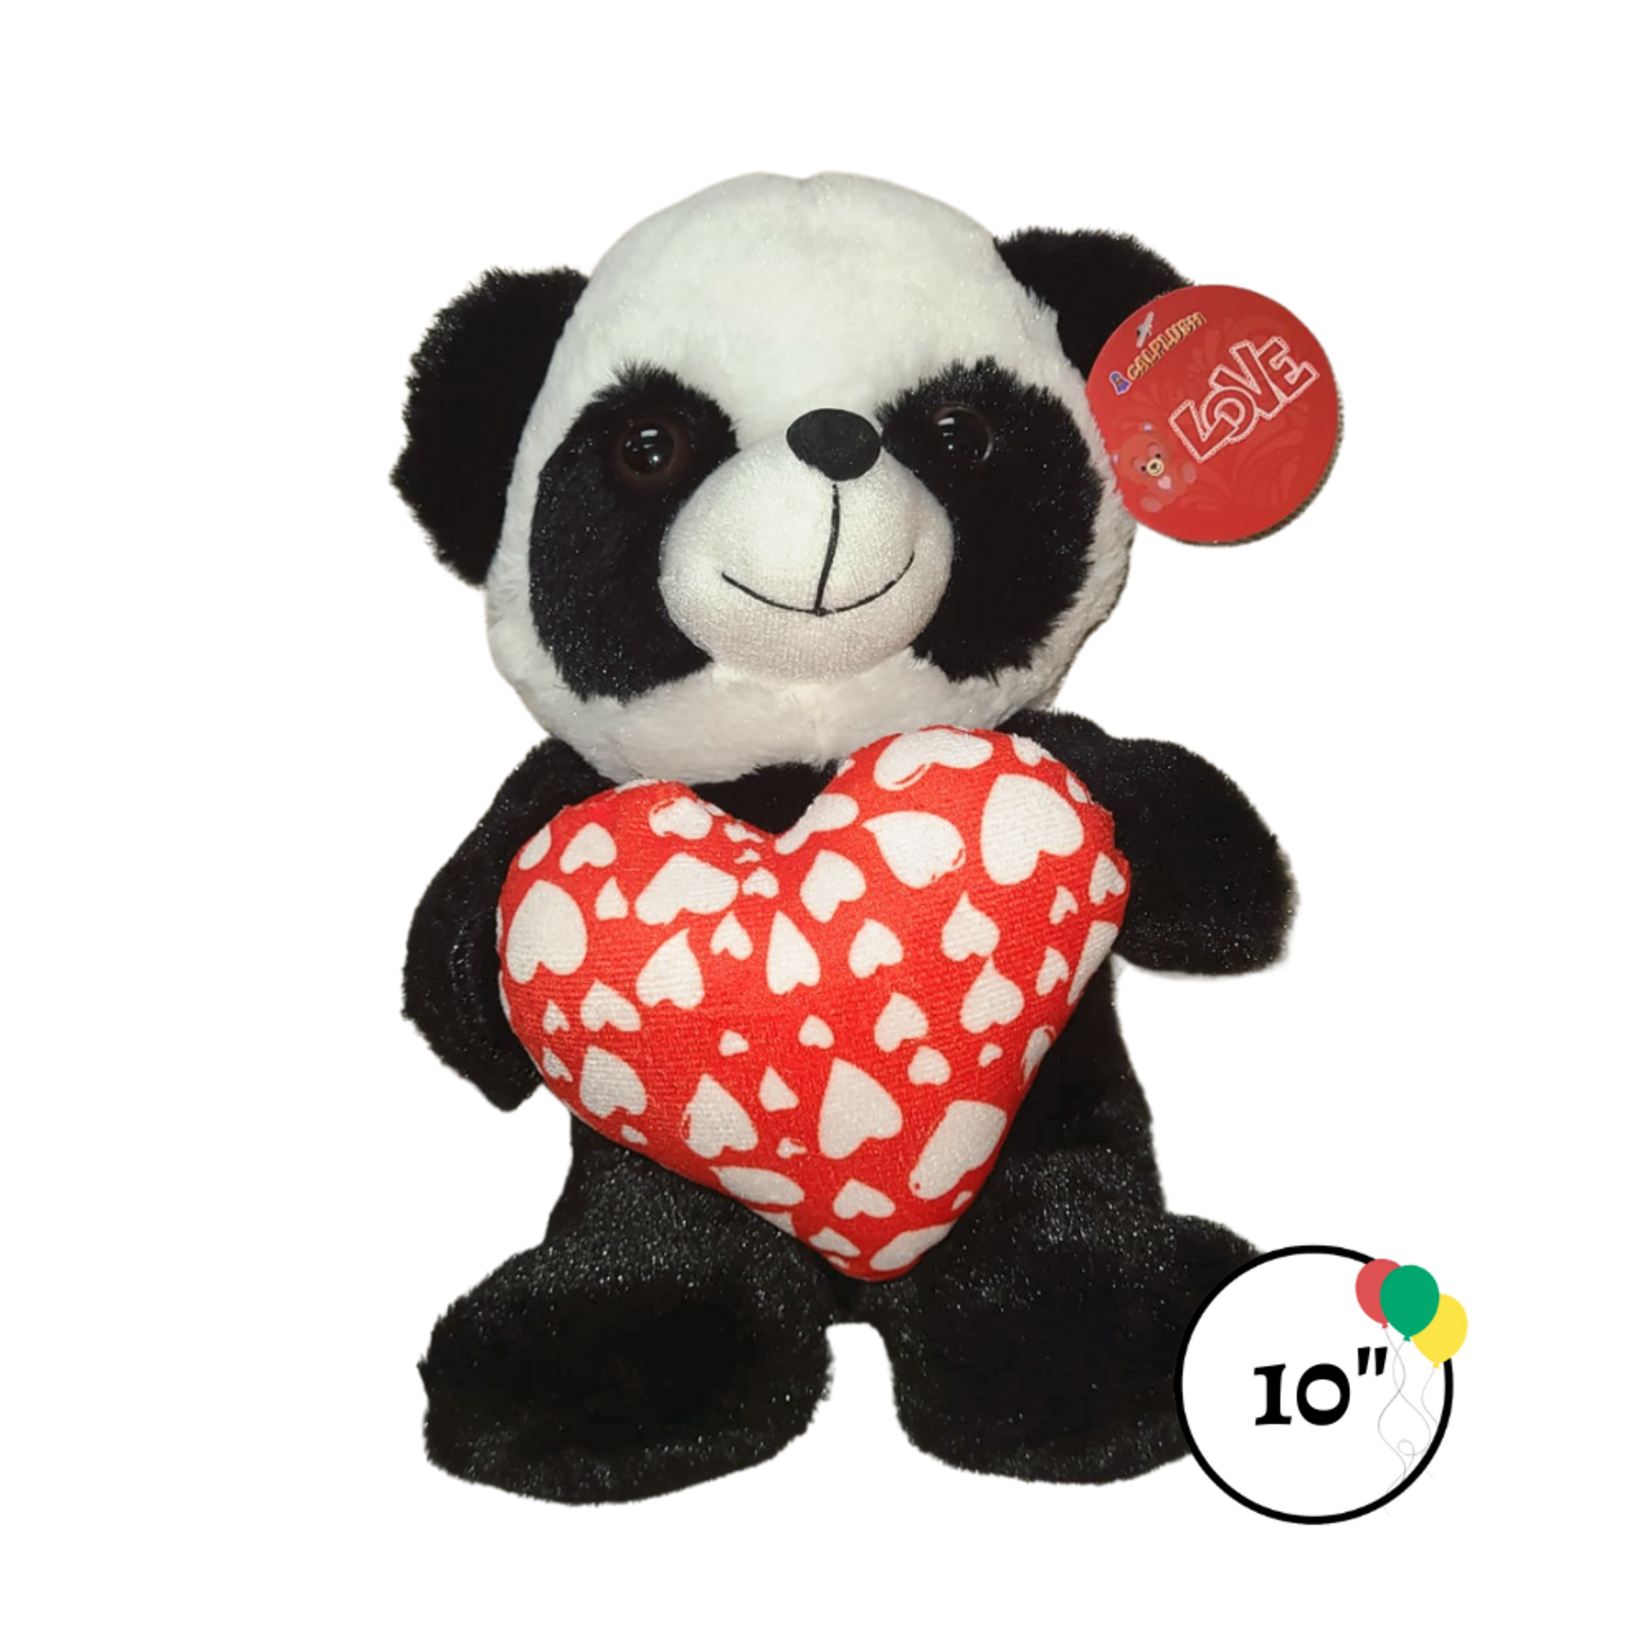 10" Panda with Heart